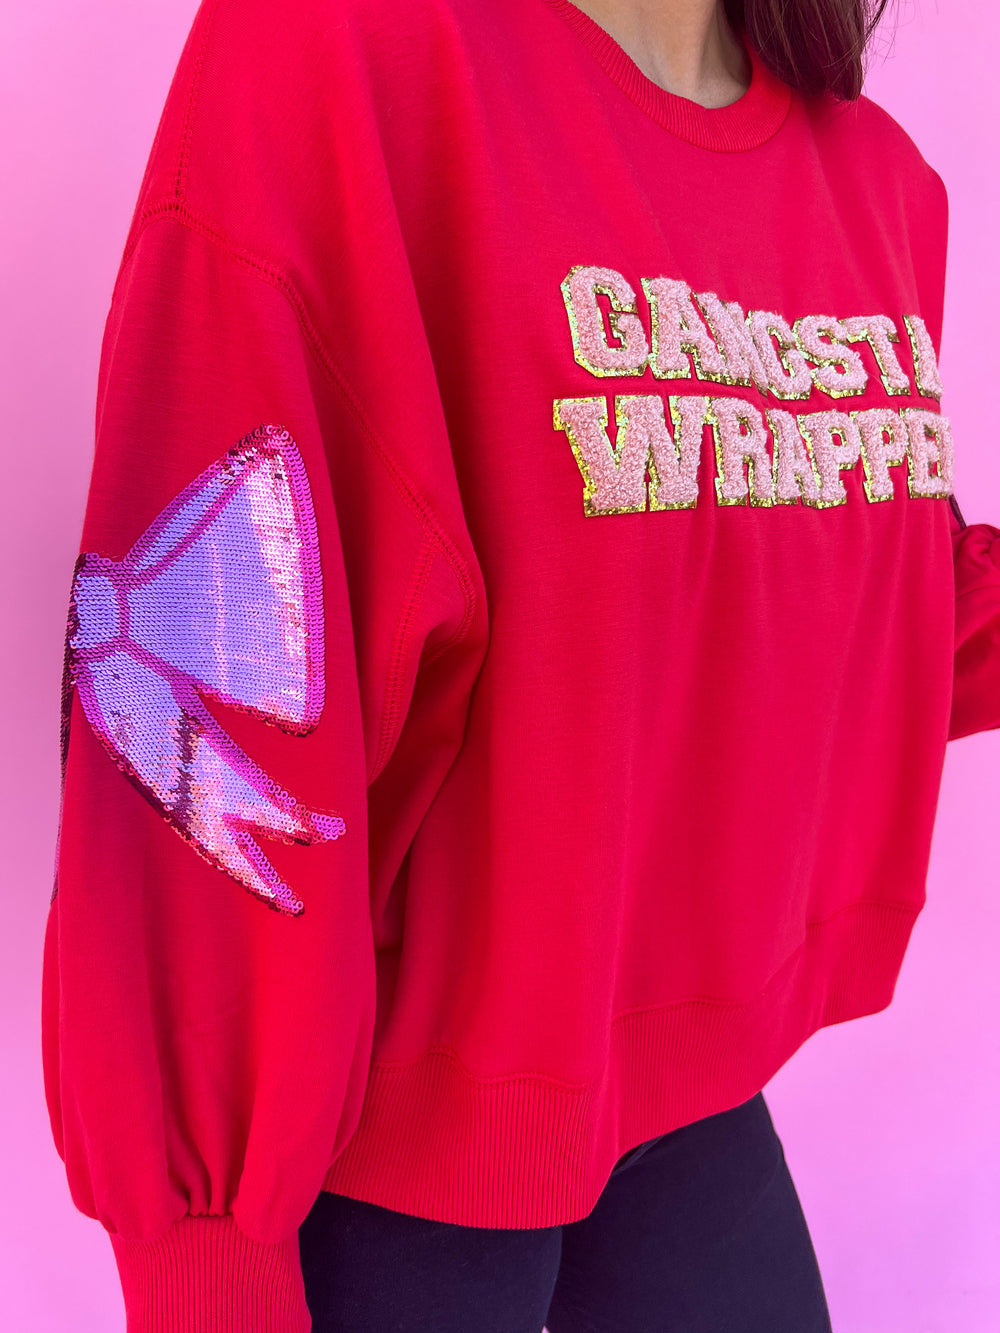 Mary Square | Millie Sweatshirt - Gangsta Wrapper